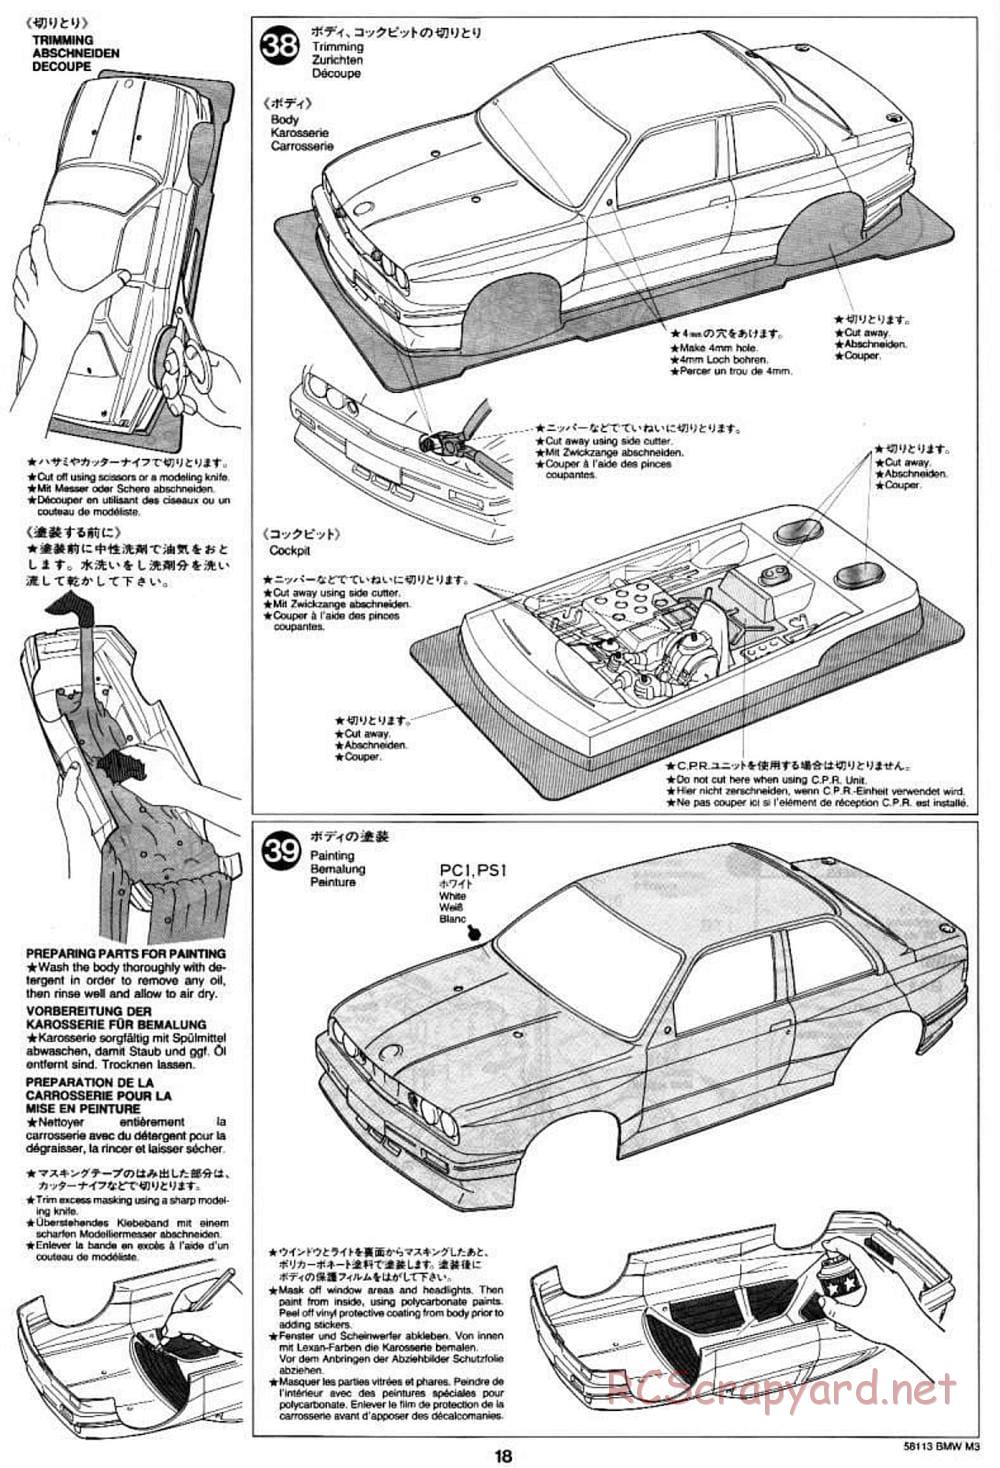 Tamiya - Schnitzer BMW M3 Sport Evo - TA-01 Chassis - Manual - Page 18